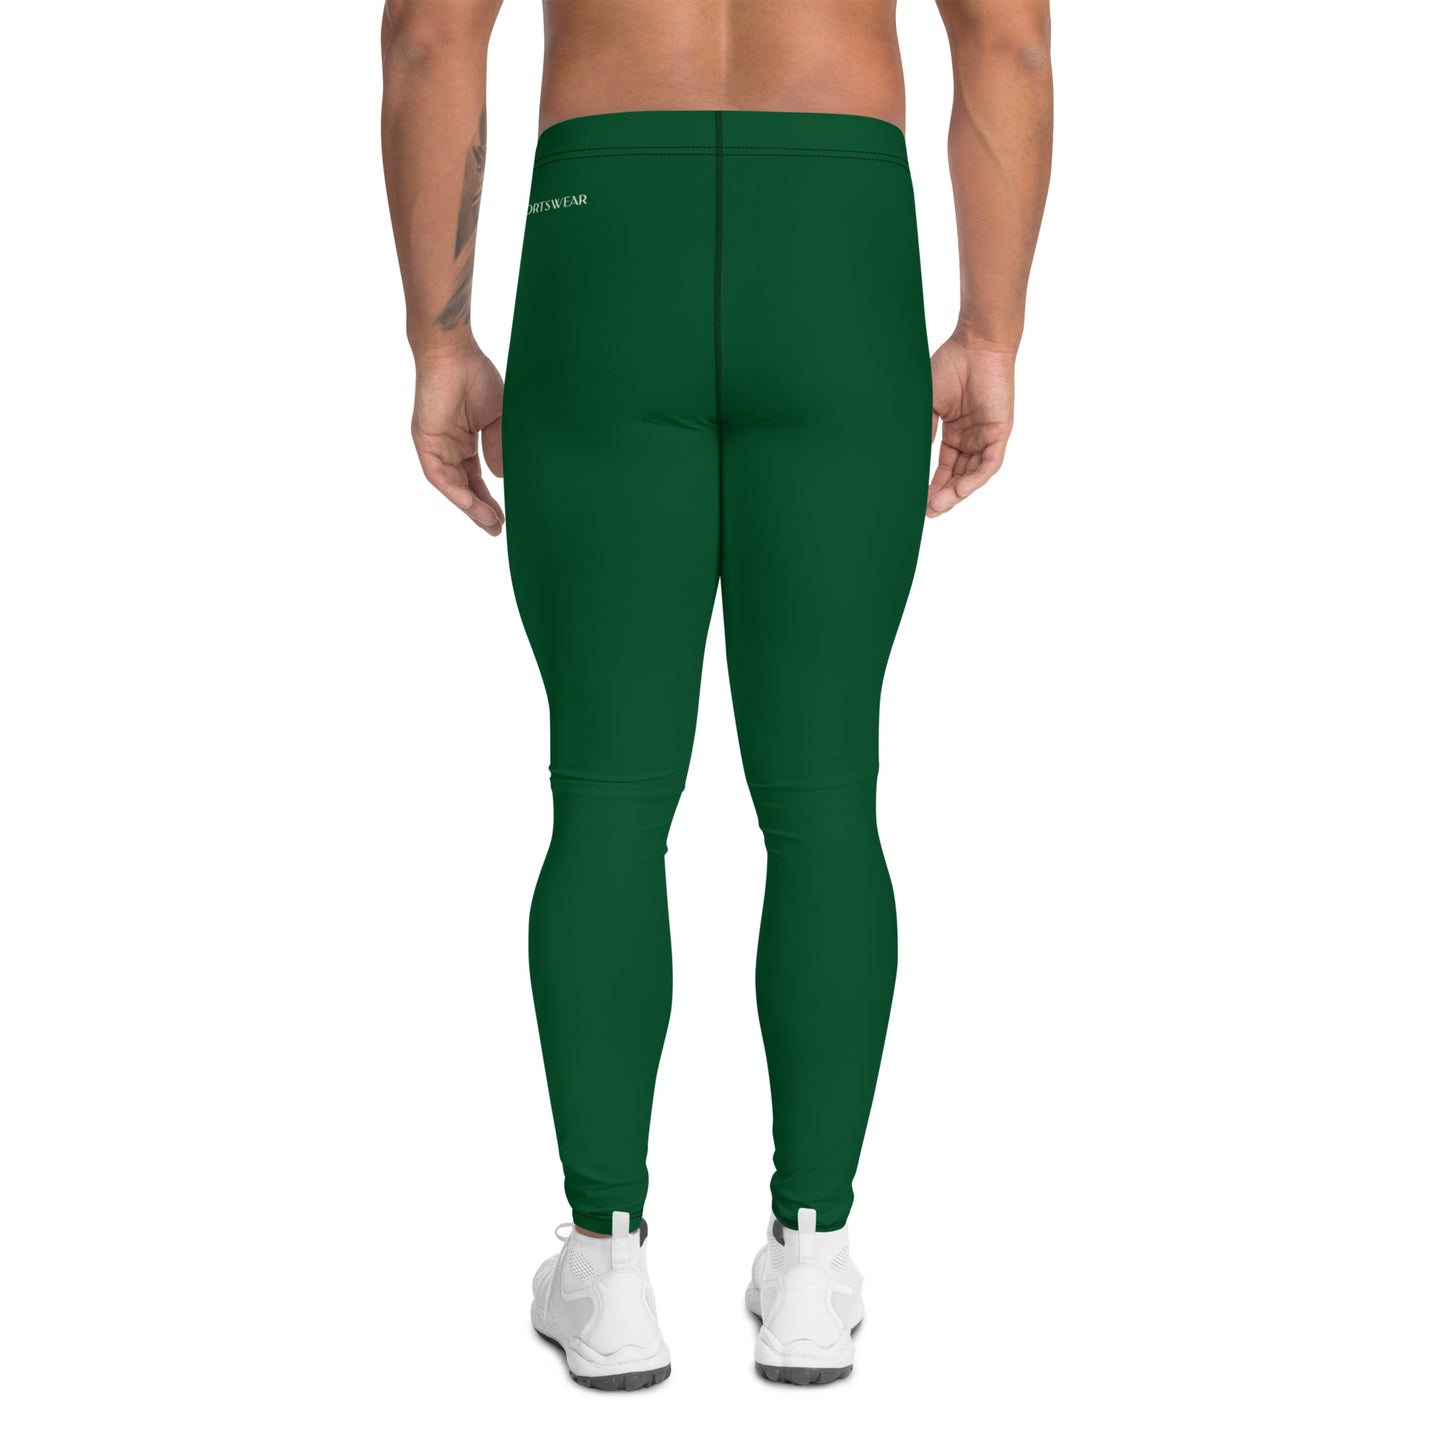 Mireille Fine Art, men's color match compression activewear stretchy gym leggings 